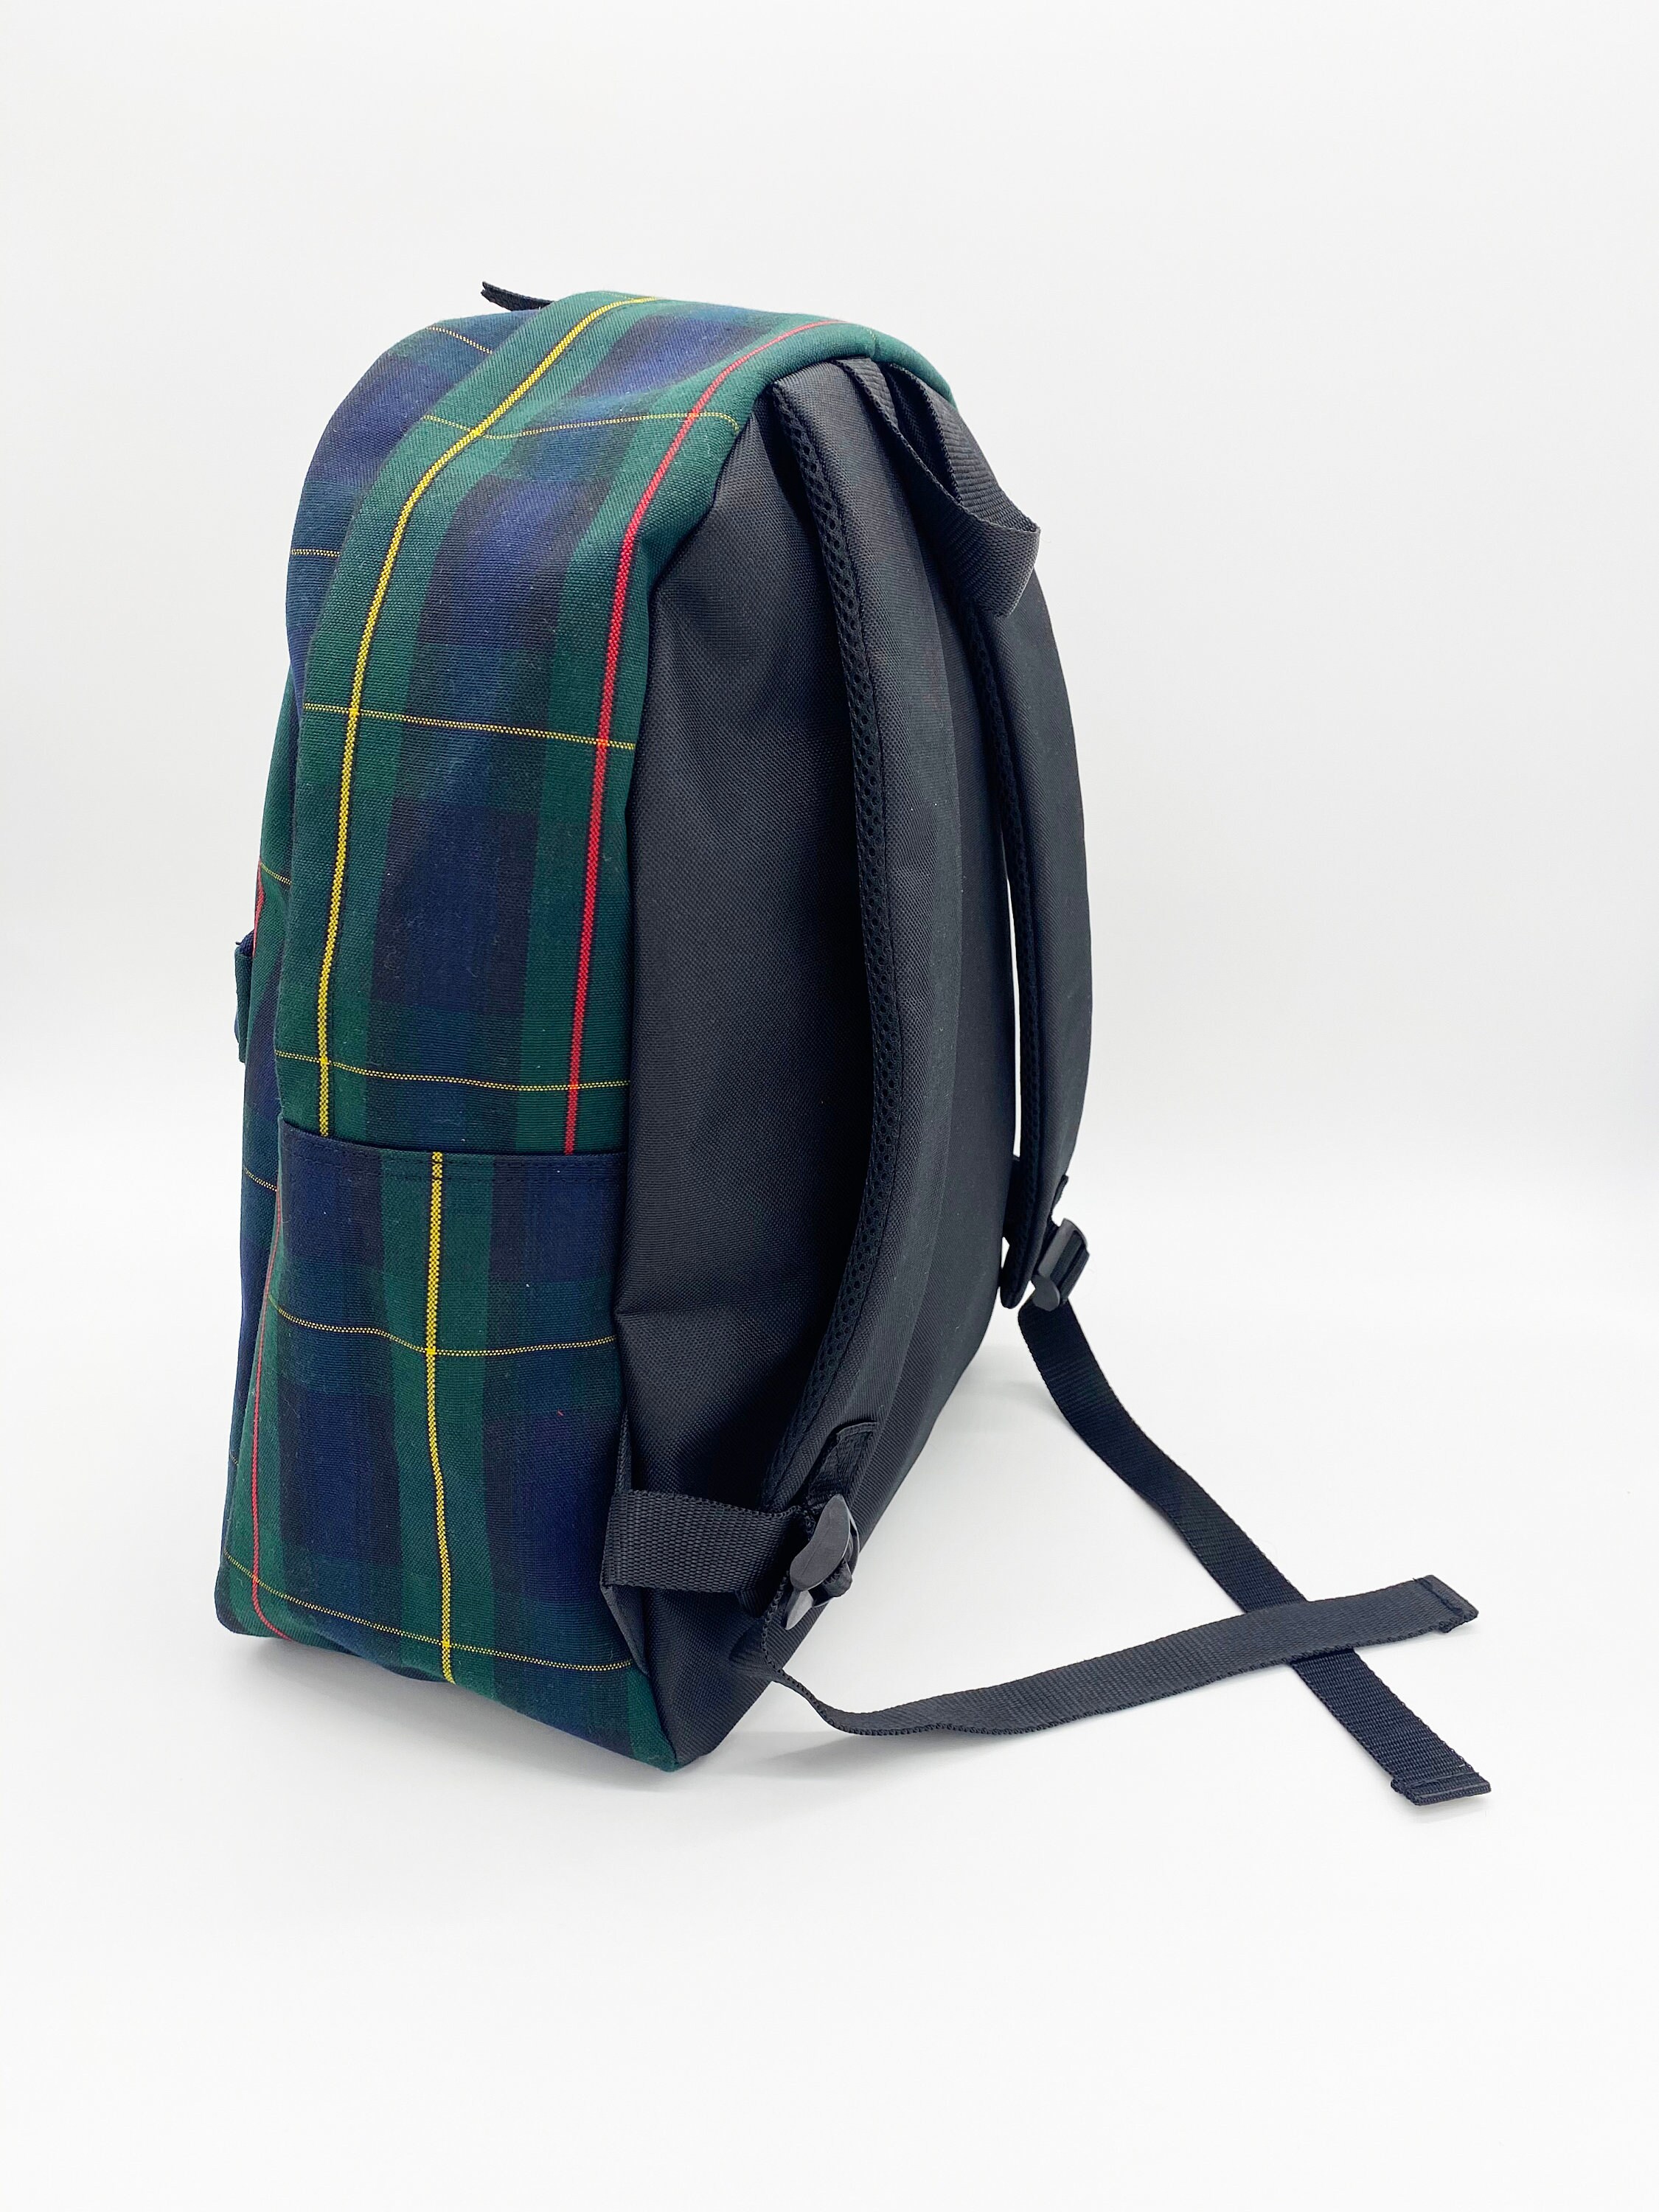 School Uniform Plaid Backpack/Back to School/Sport | Etsy